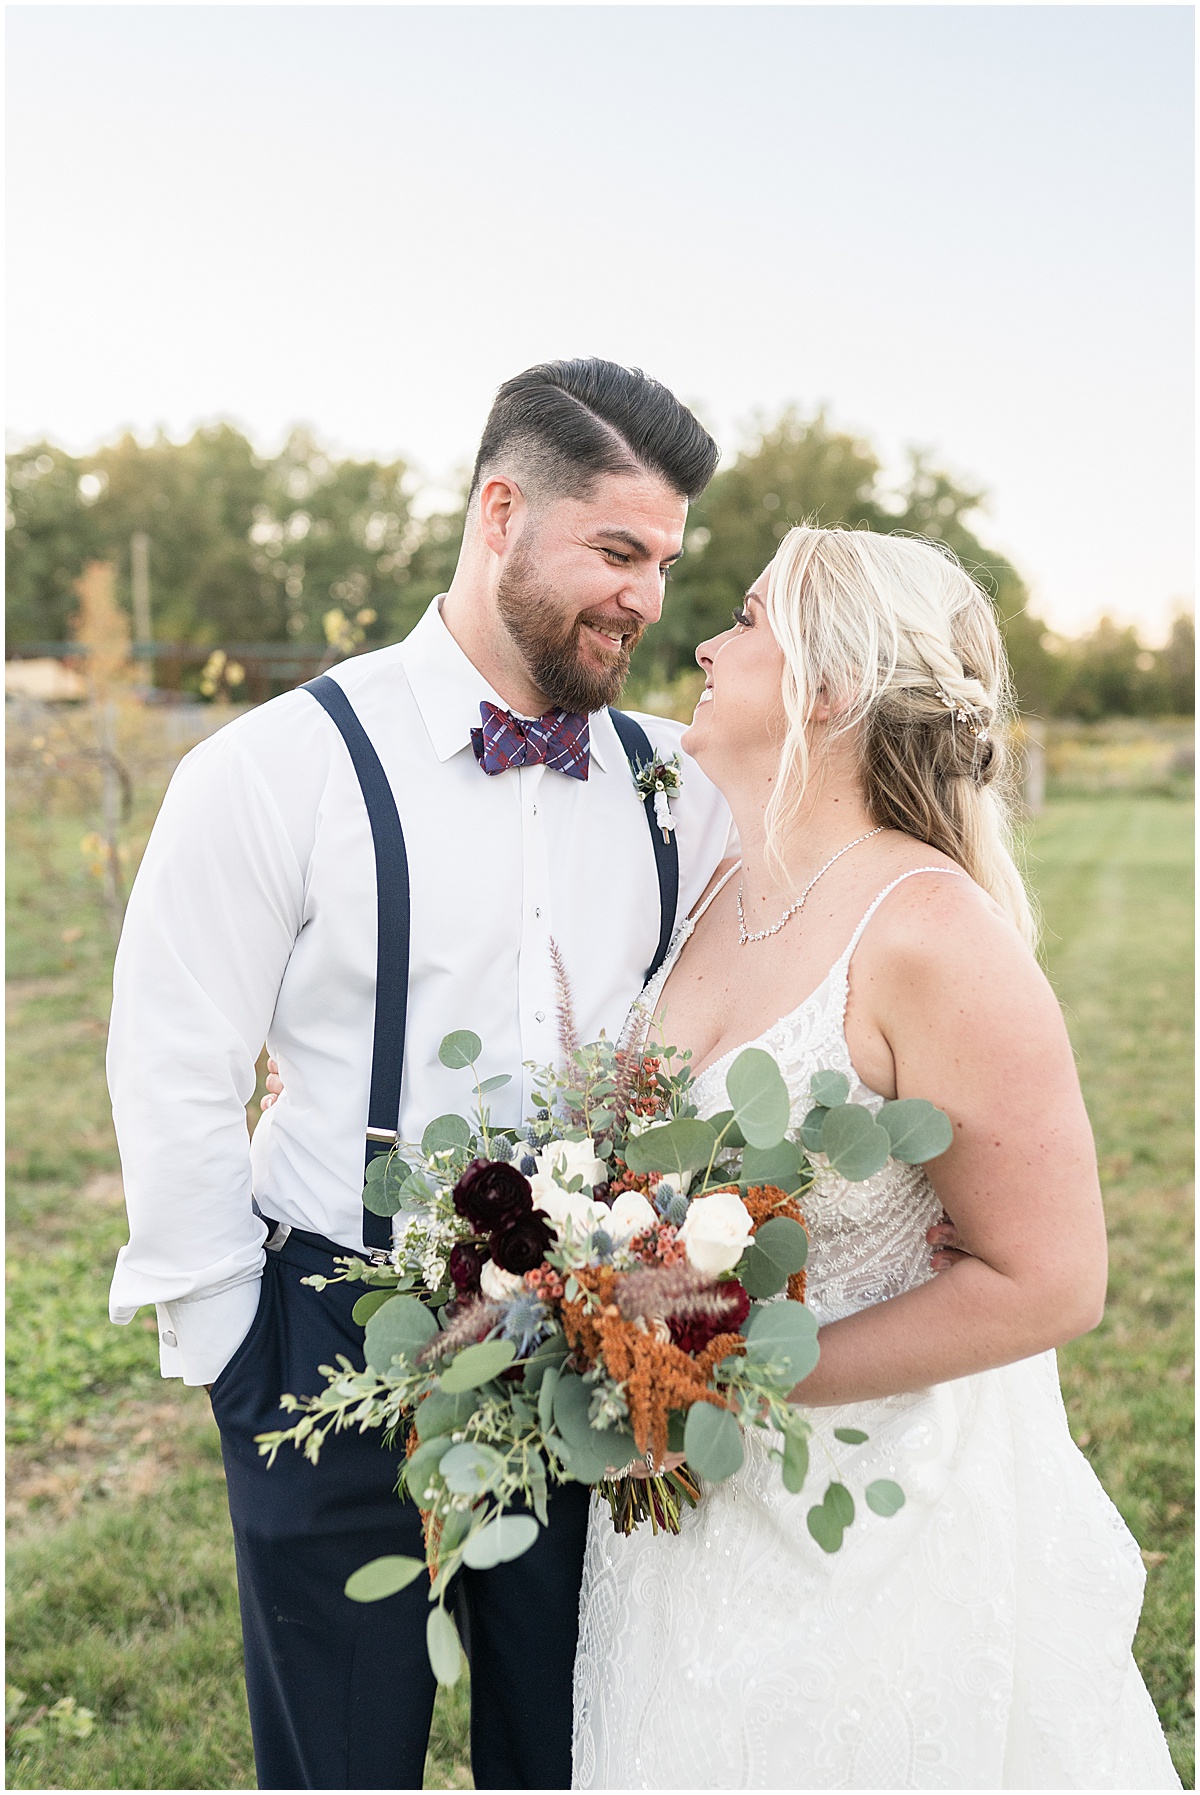 Newlyweds sunset photos at Finley Creek Vineyards wedding in Zionsville, Indiana